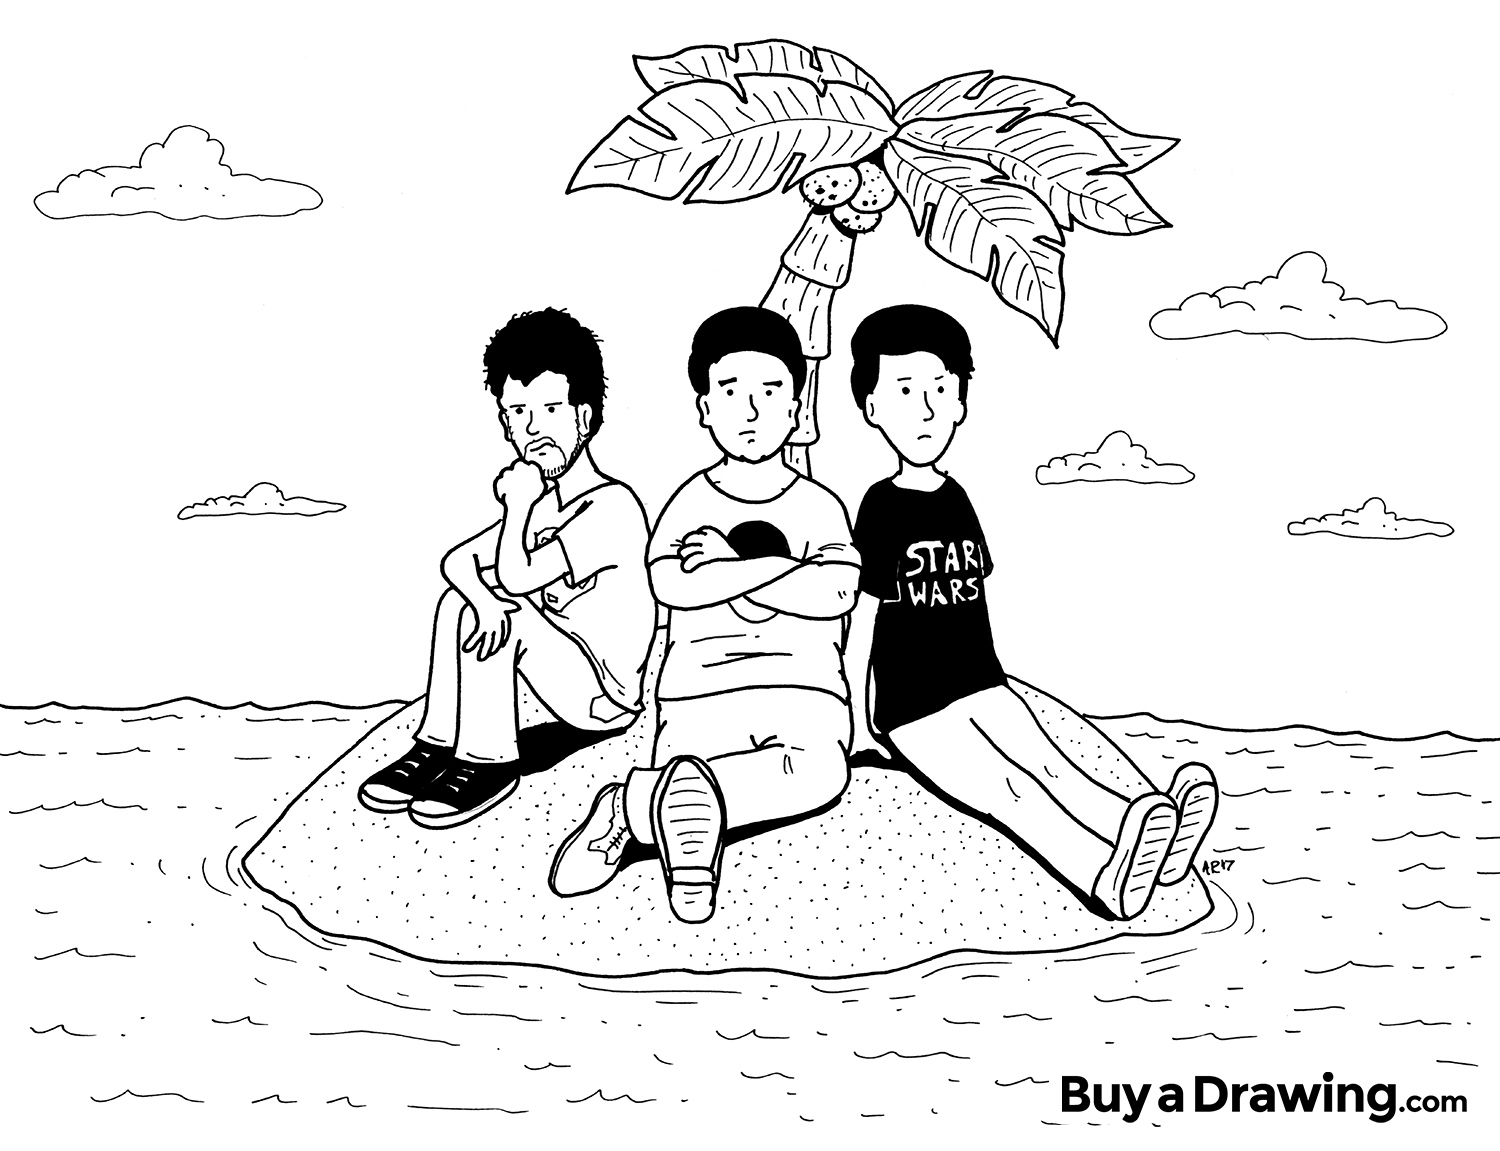 Three Friends Stranded on an Island Cartoon Drawing